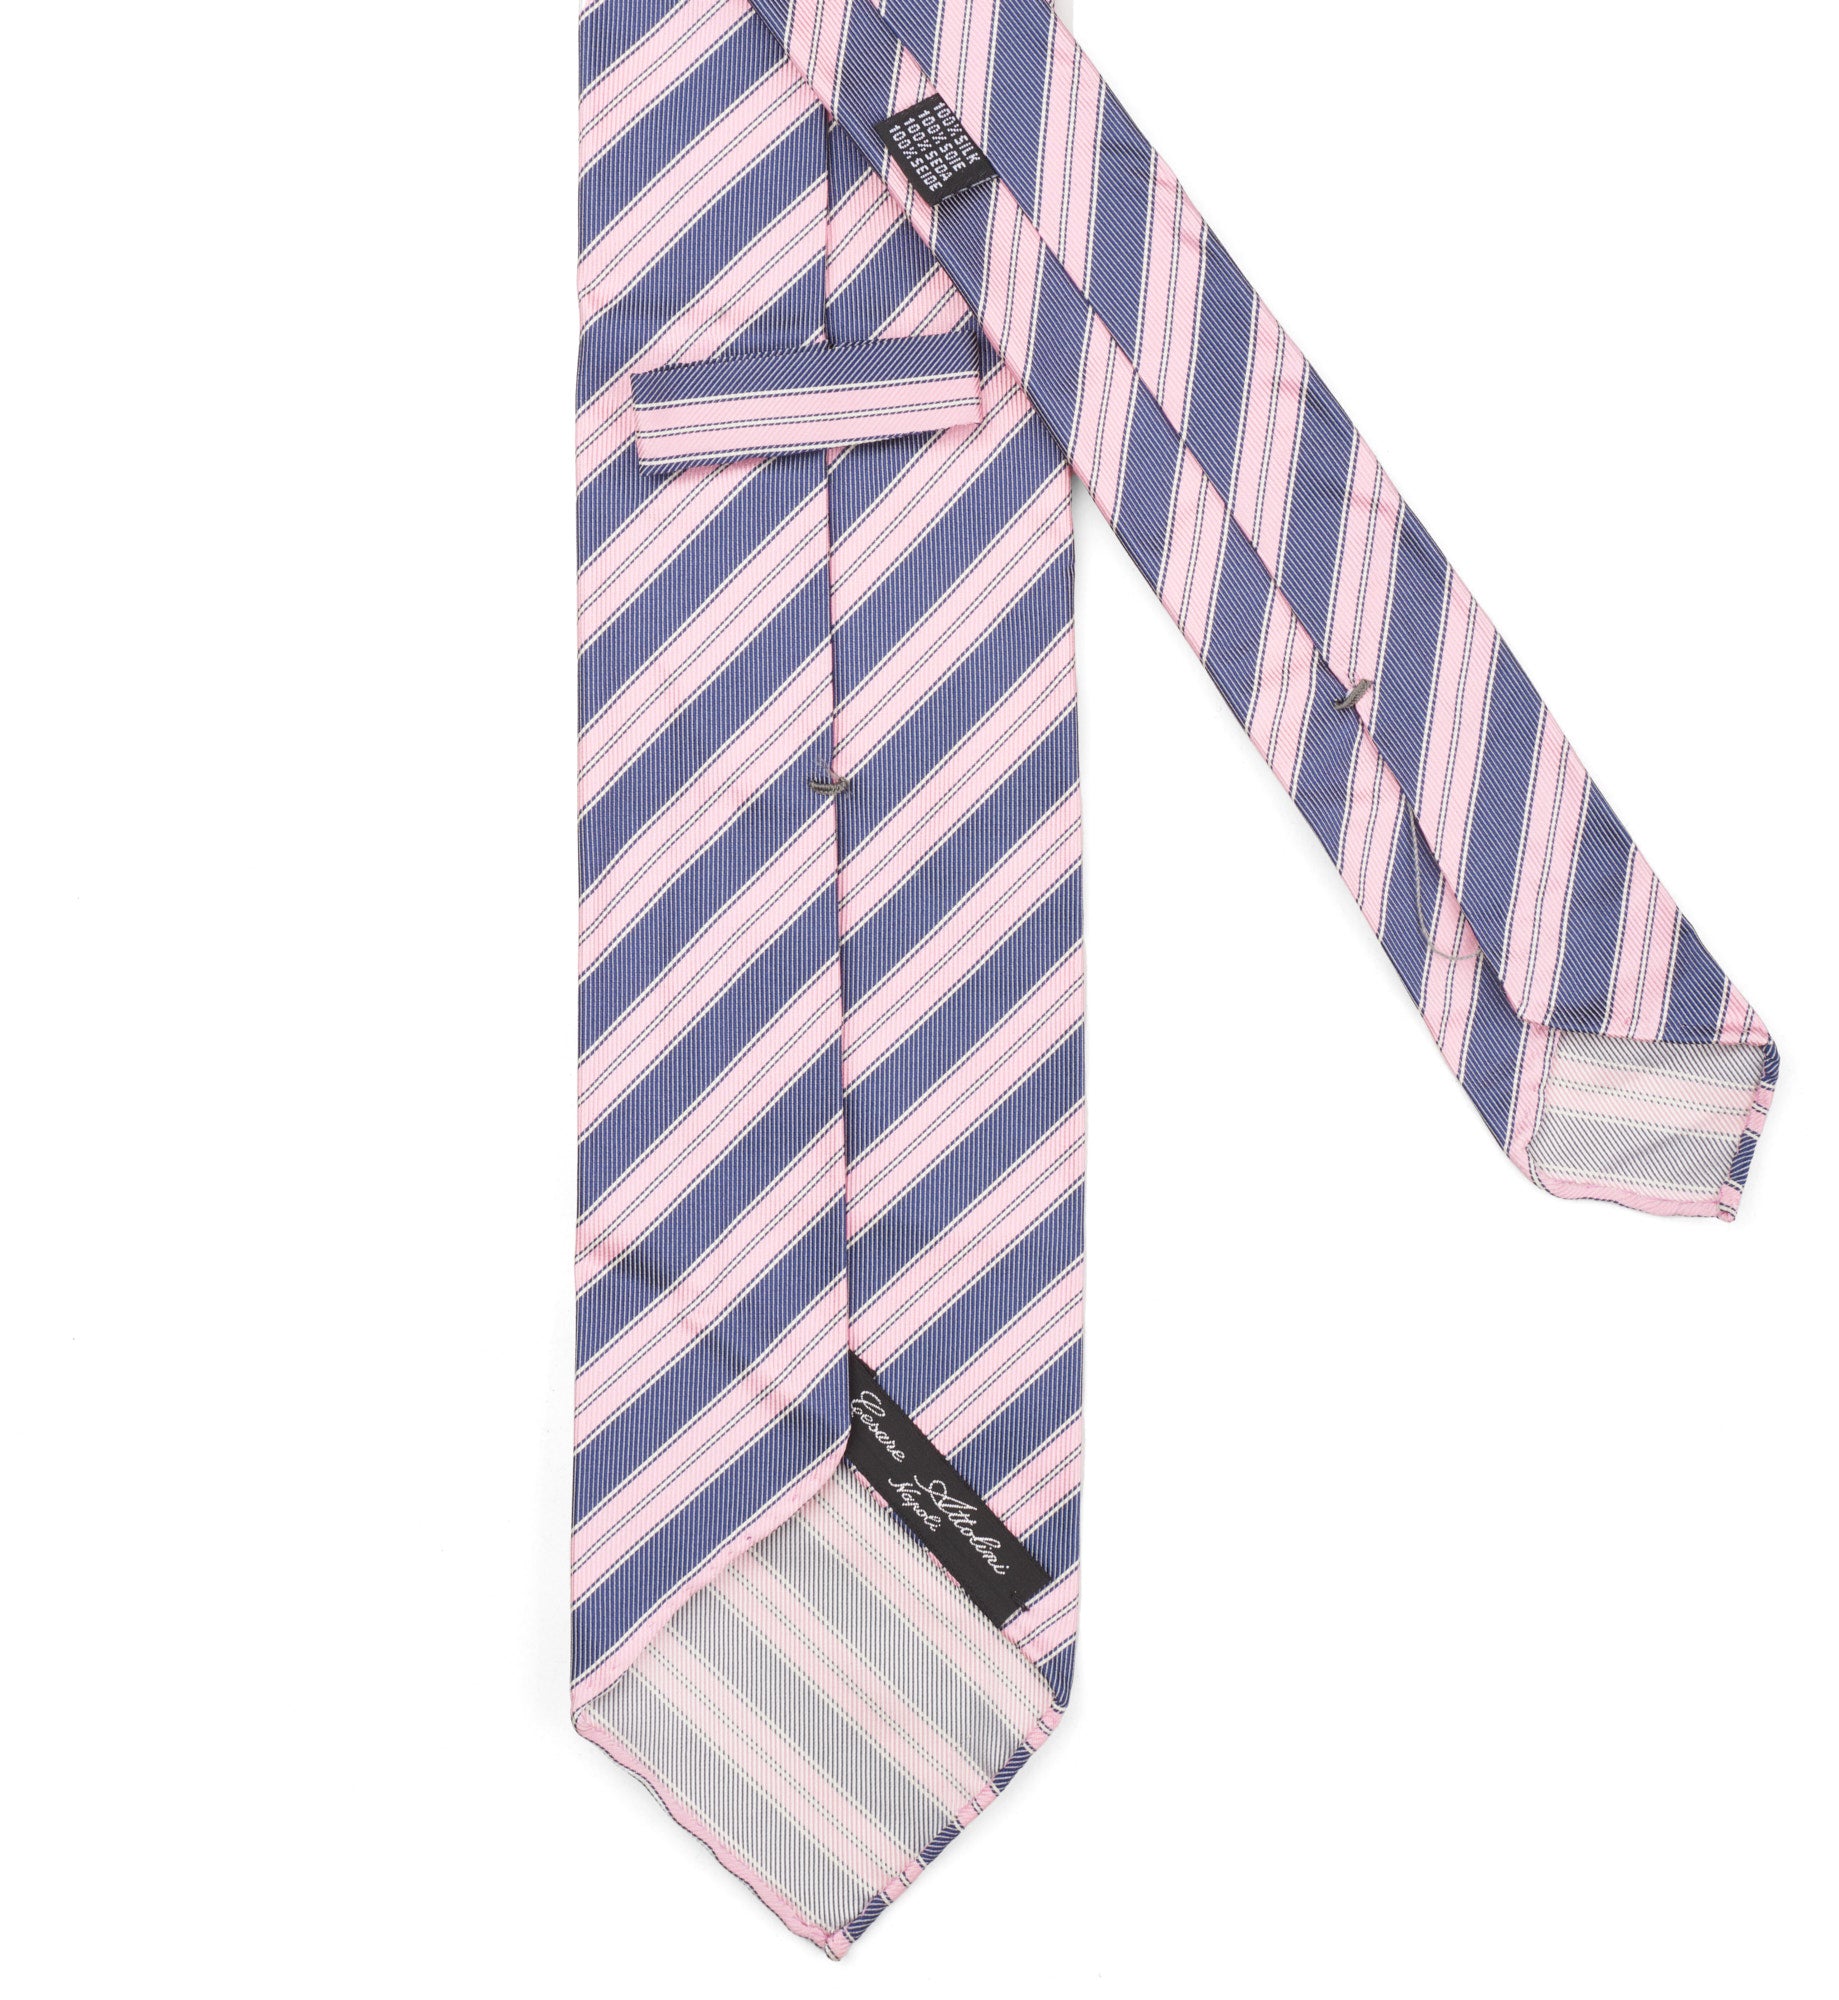 CESARE ATTOLINI Handmade Blue-Pink Striped Design Silk Tie NEW CESARE ATTOLINI